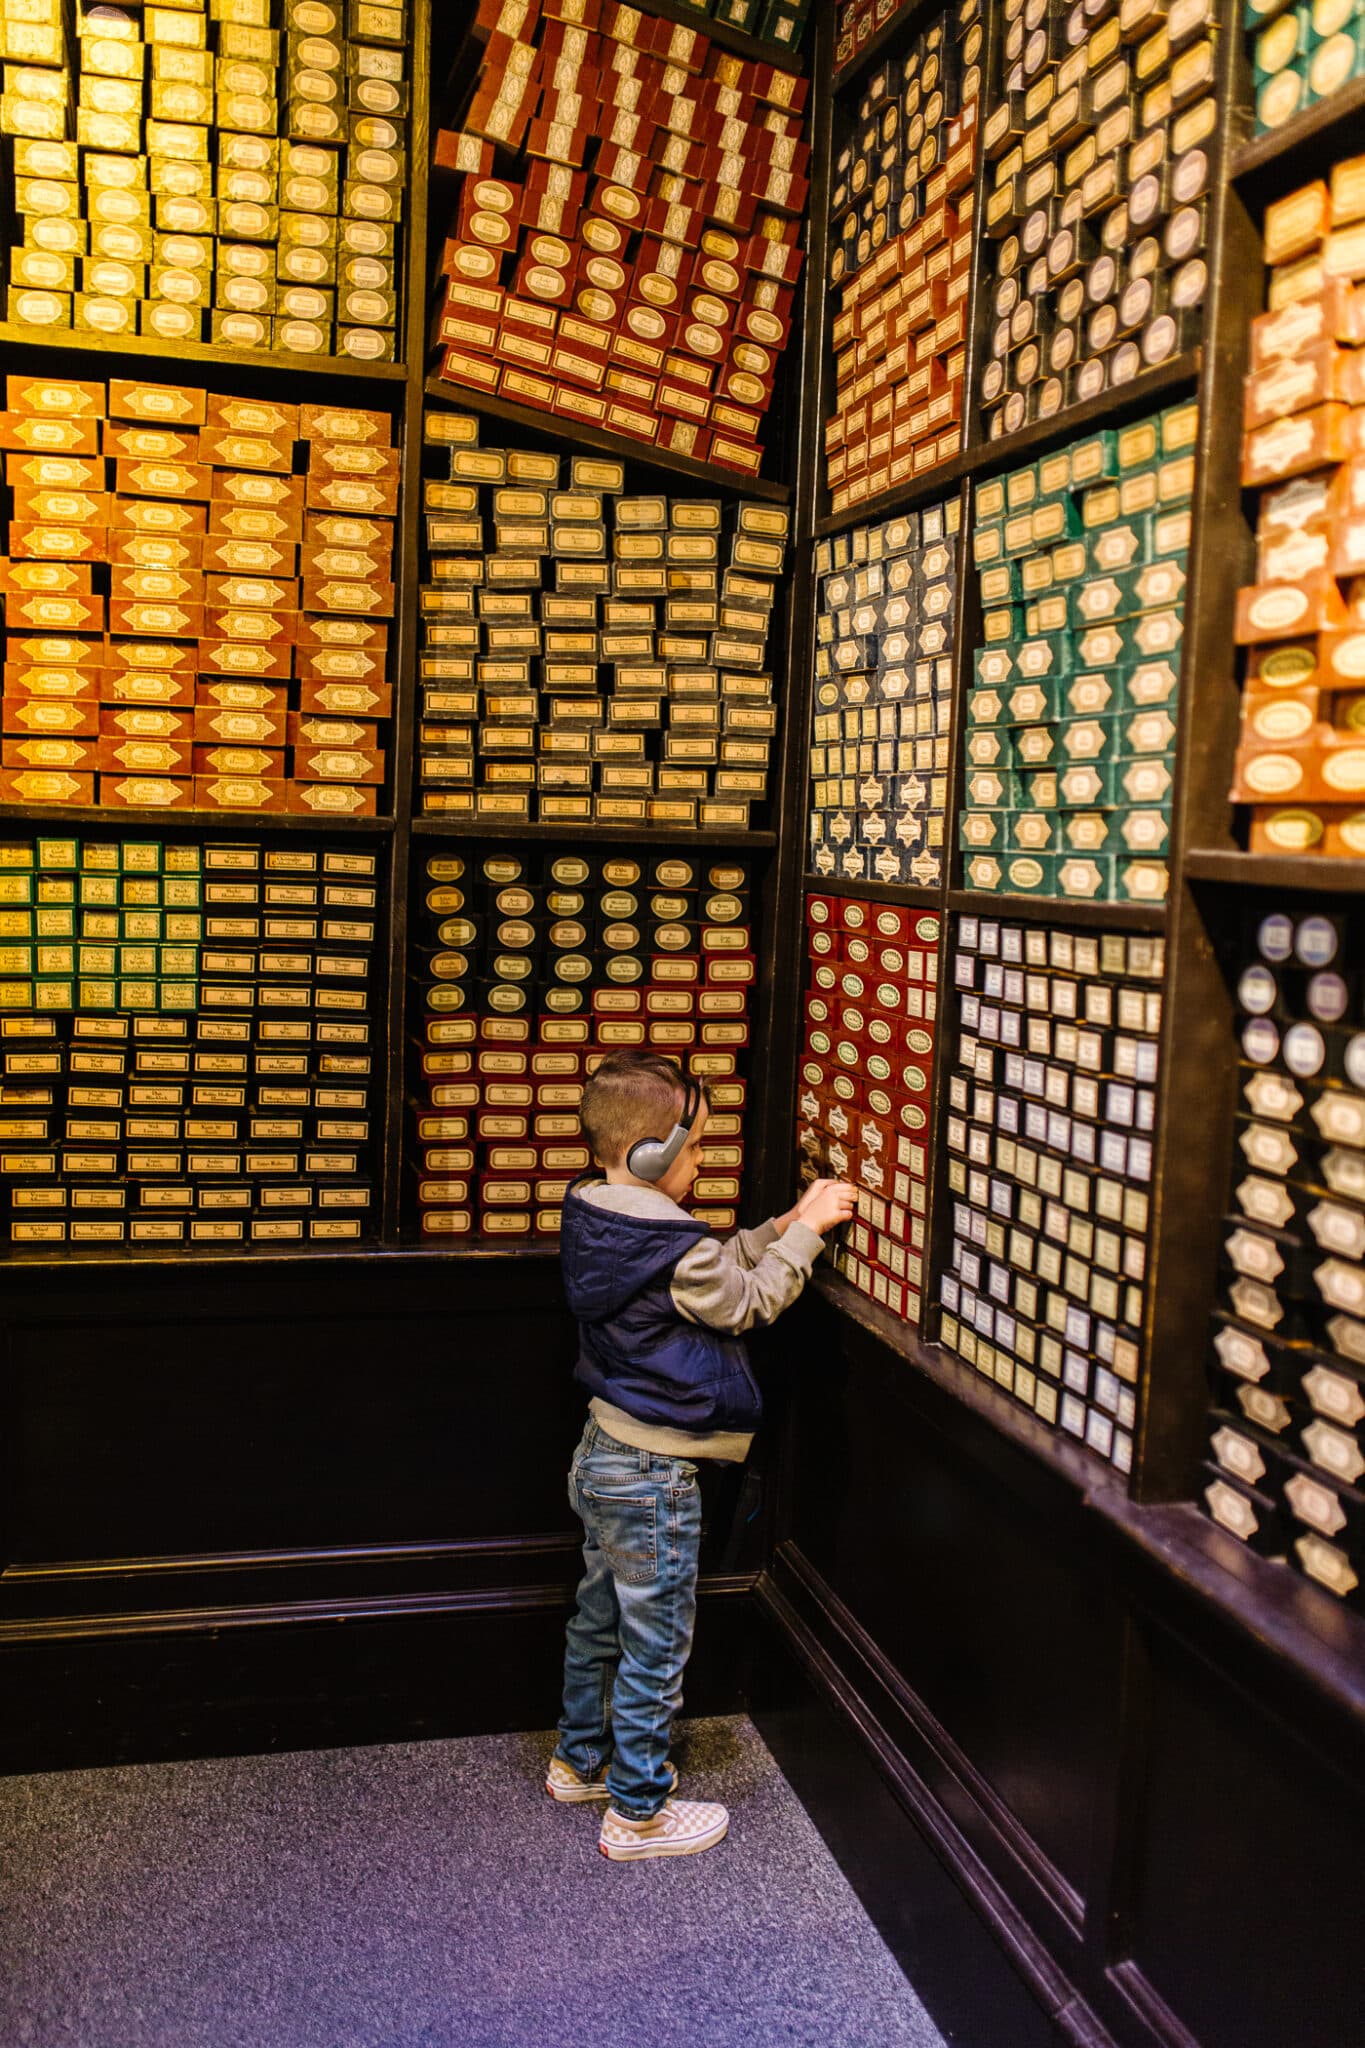 Ollivanders Wand Shop at the Harry Potter Studios Tour London. 